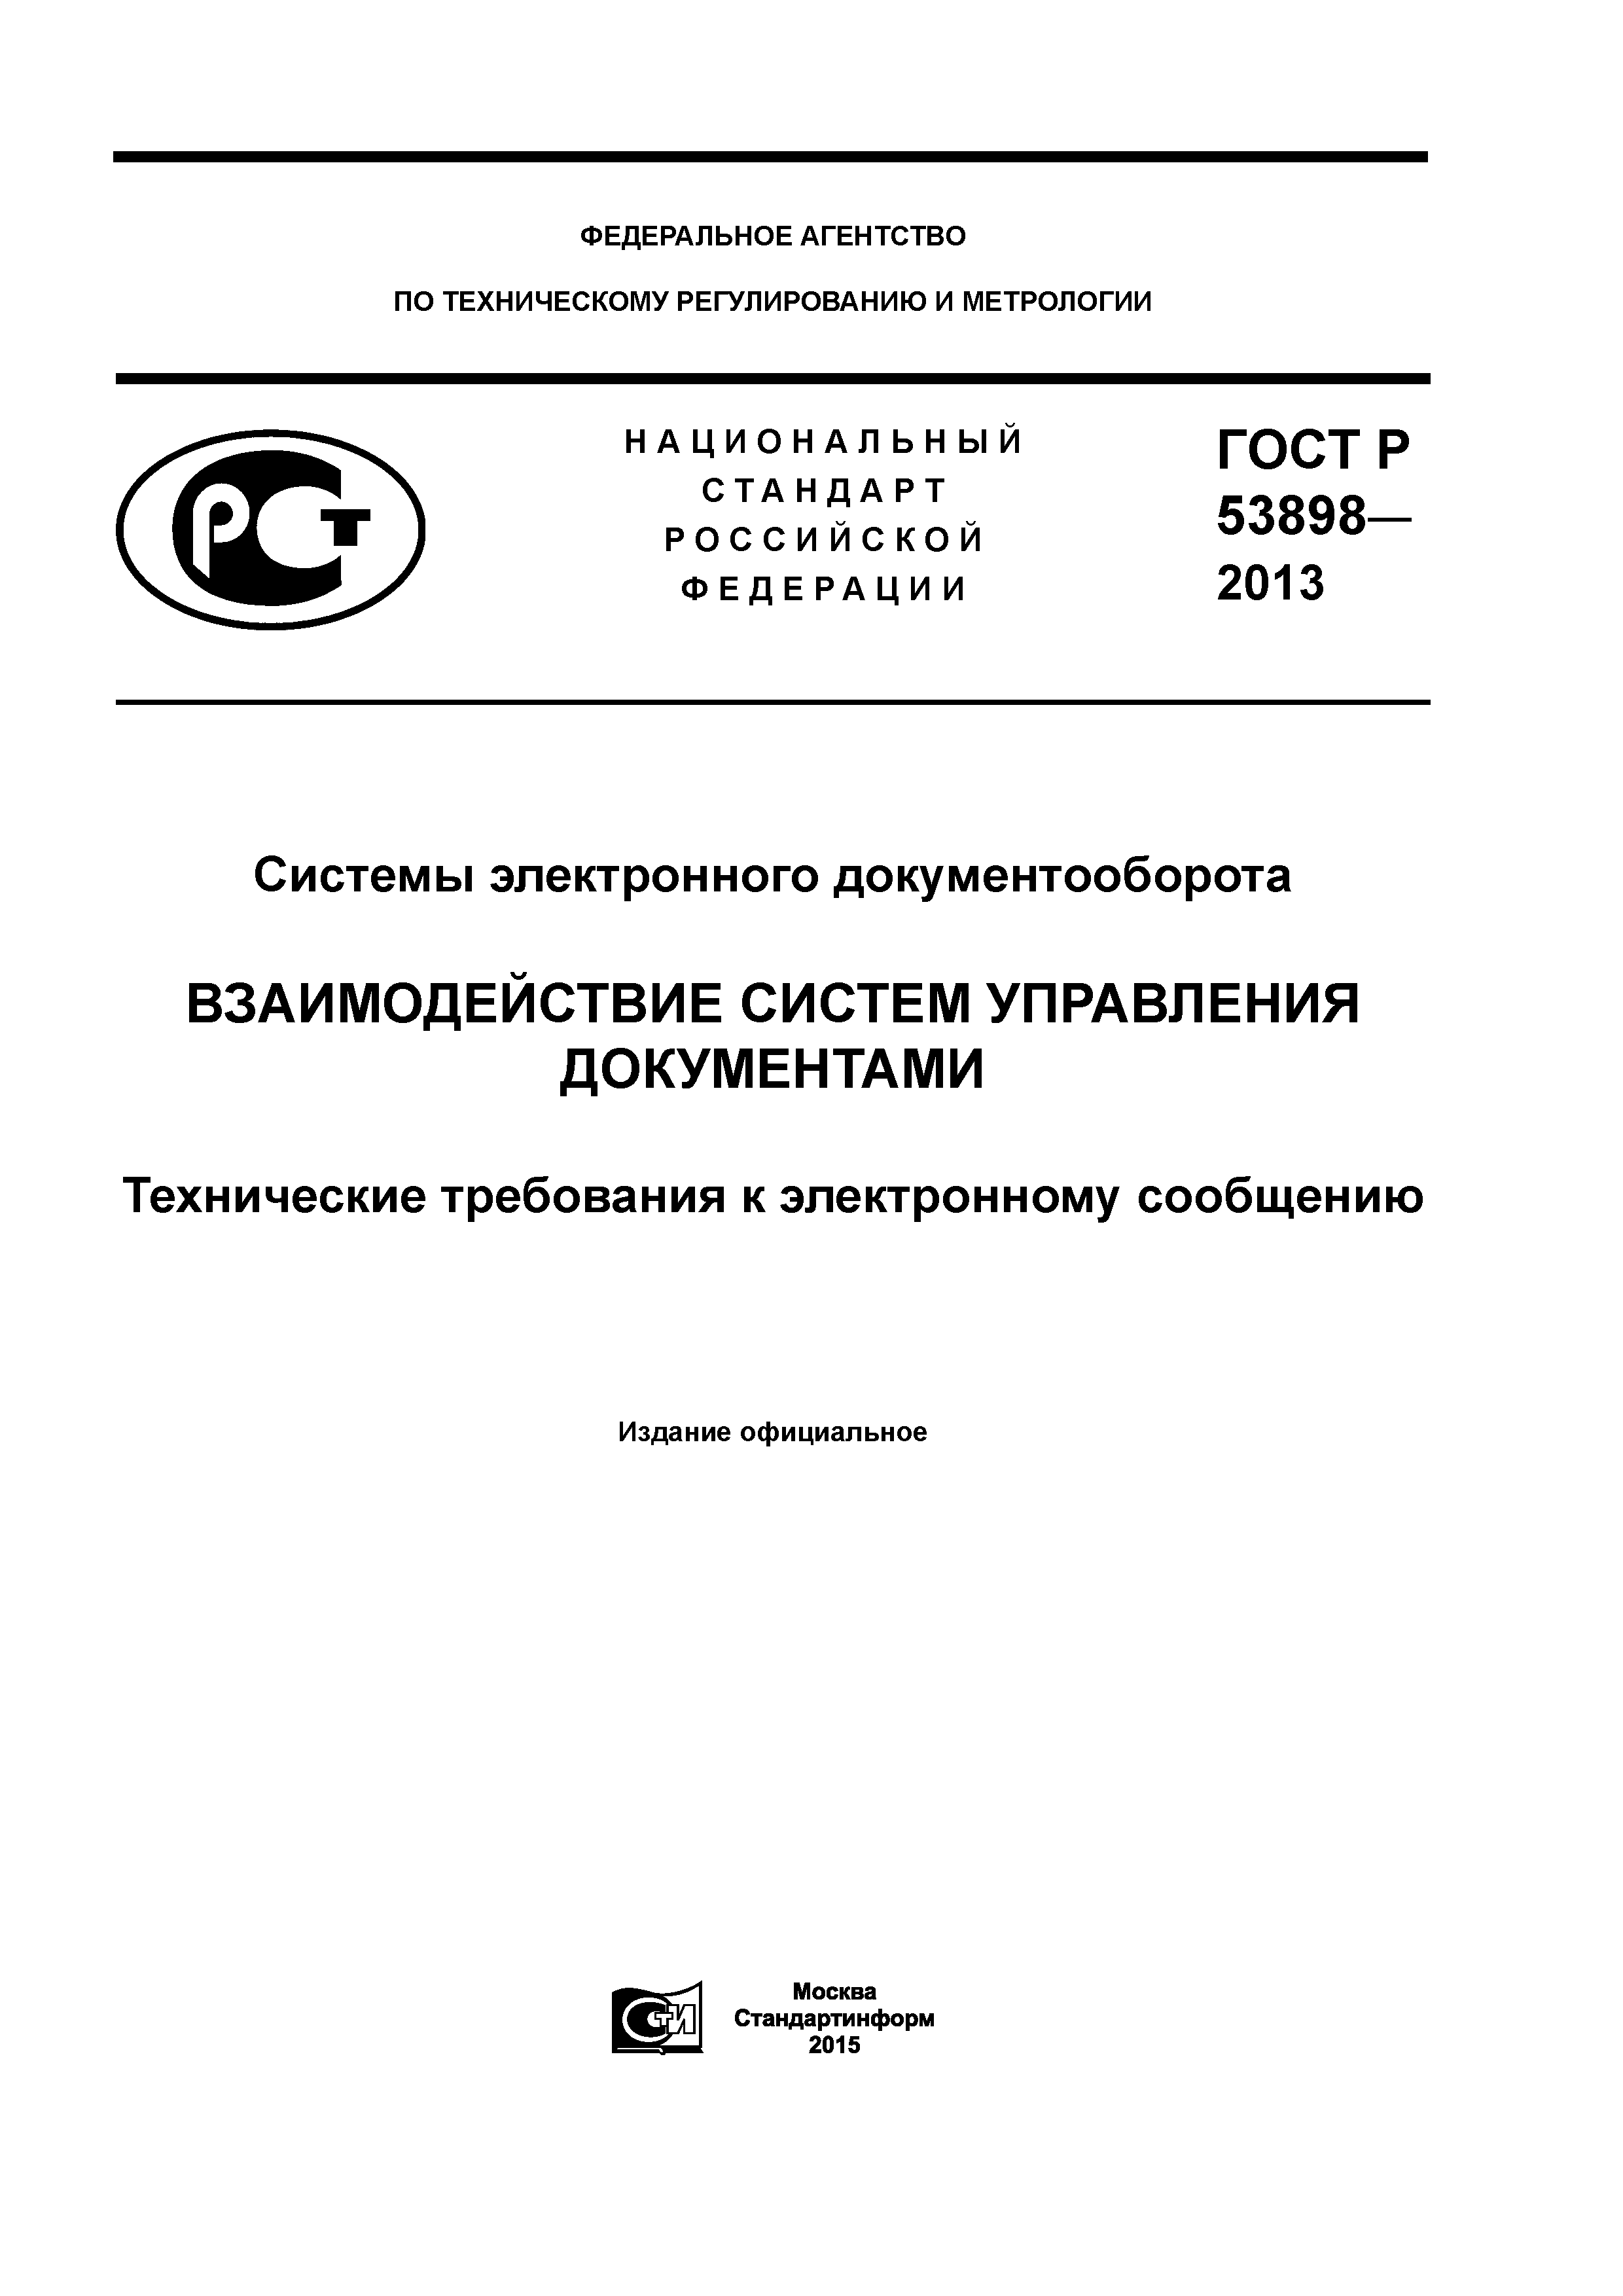 ГОСТ Р 53898-2013